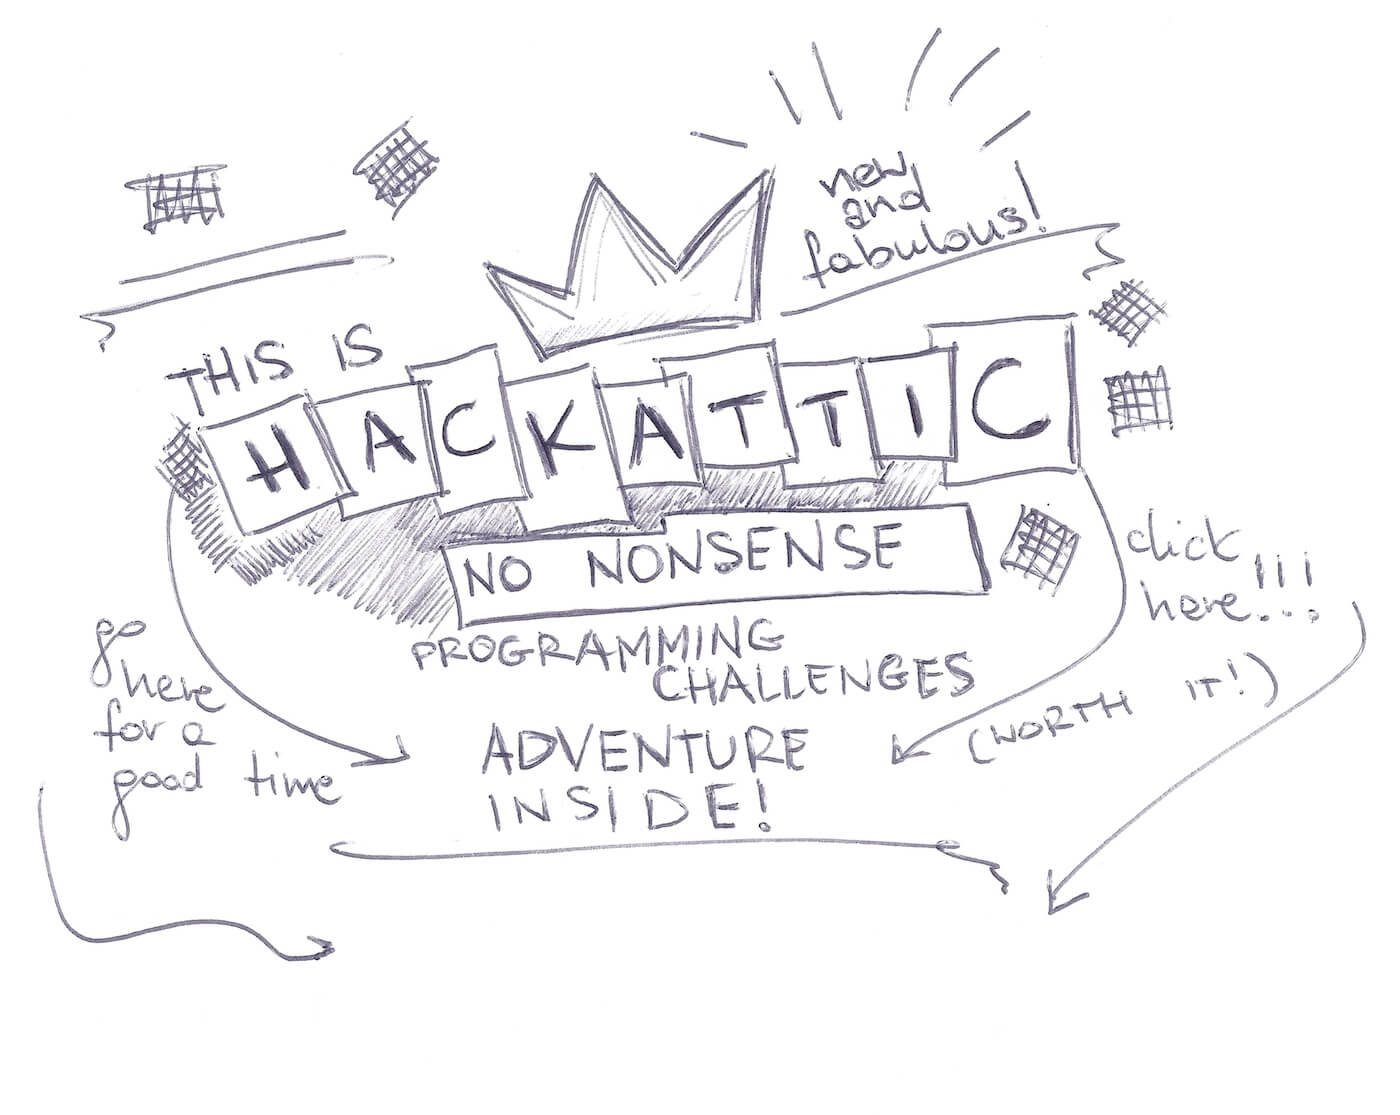 hackattic: no-nonsense programming challenges